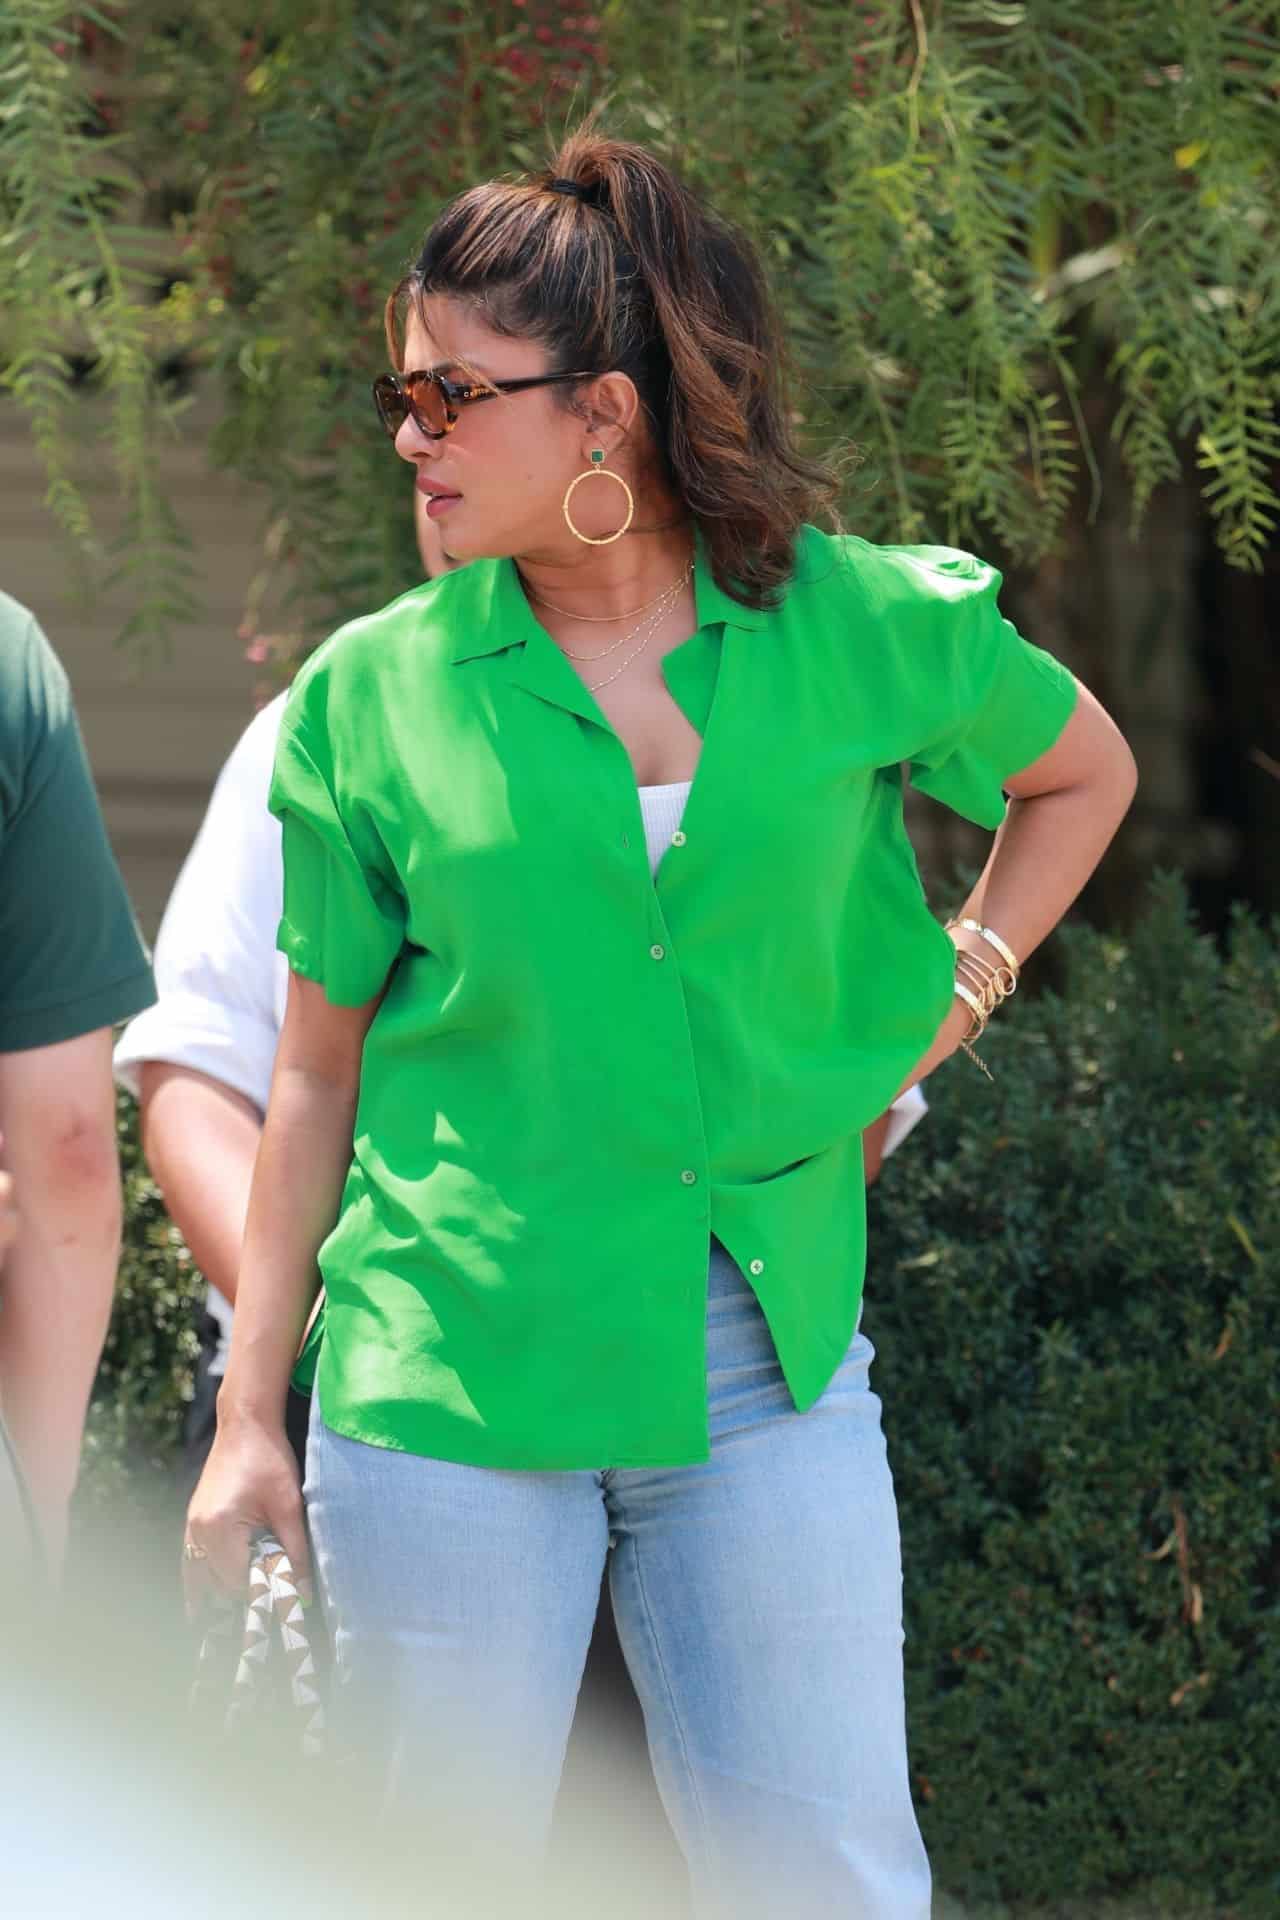 Priyanka Chopra Rocks a Vivid Unbuttoned Green Shirt for Lunch with Friends